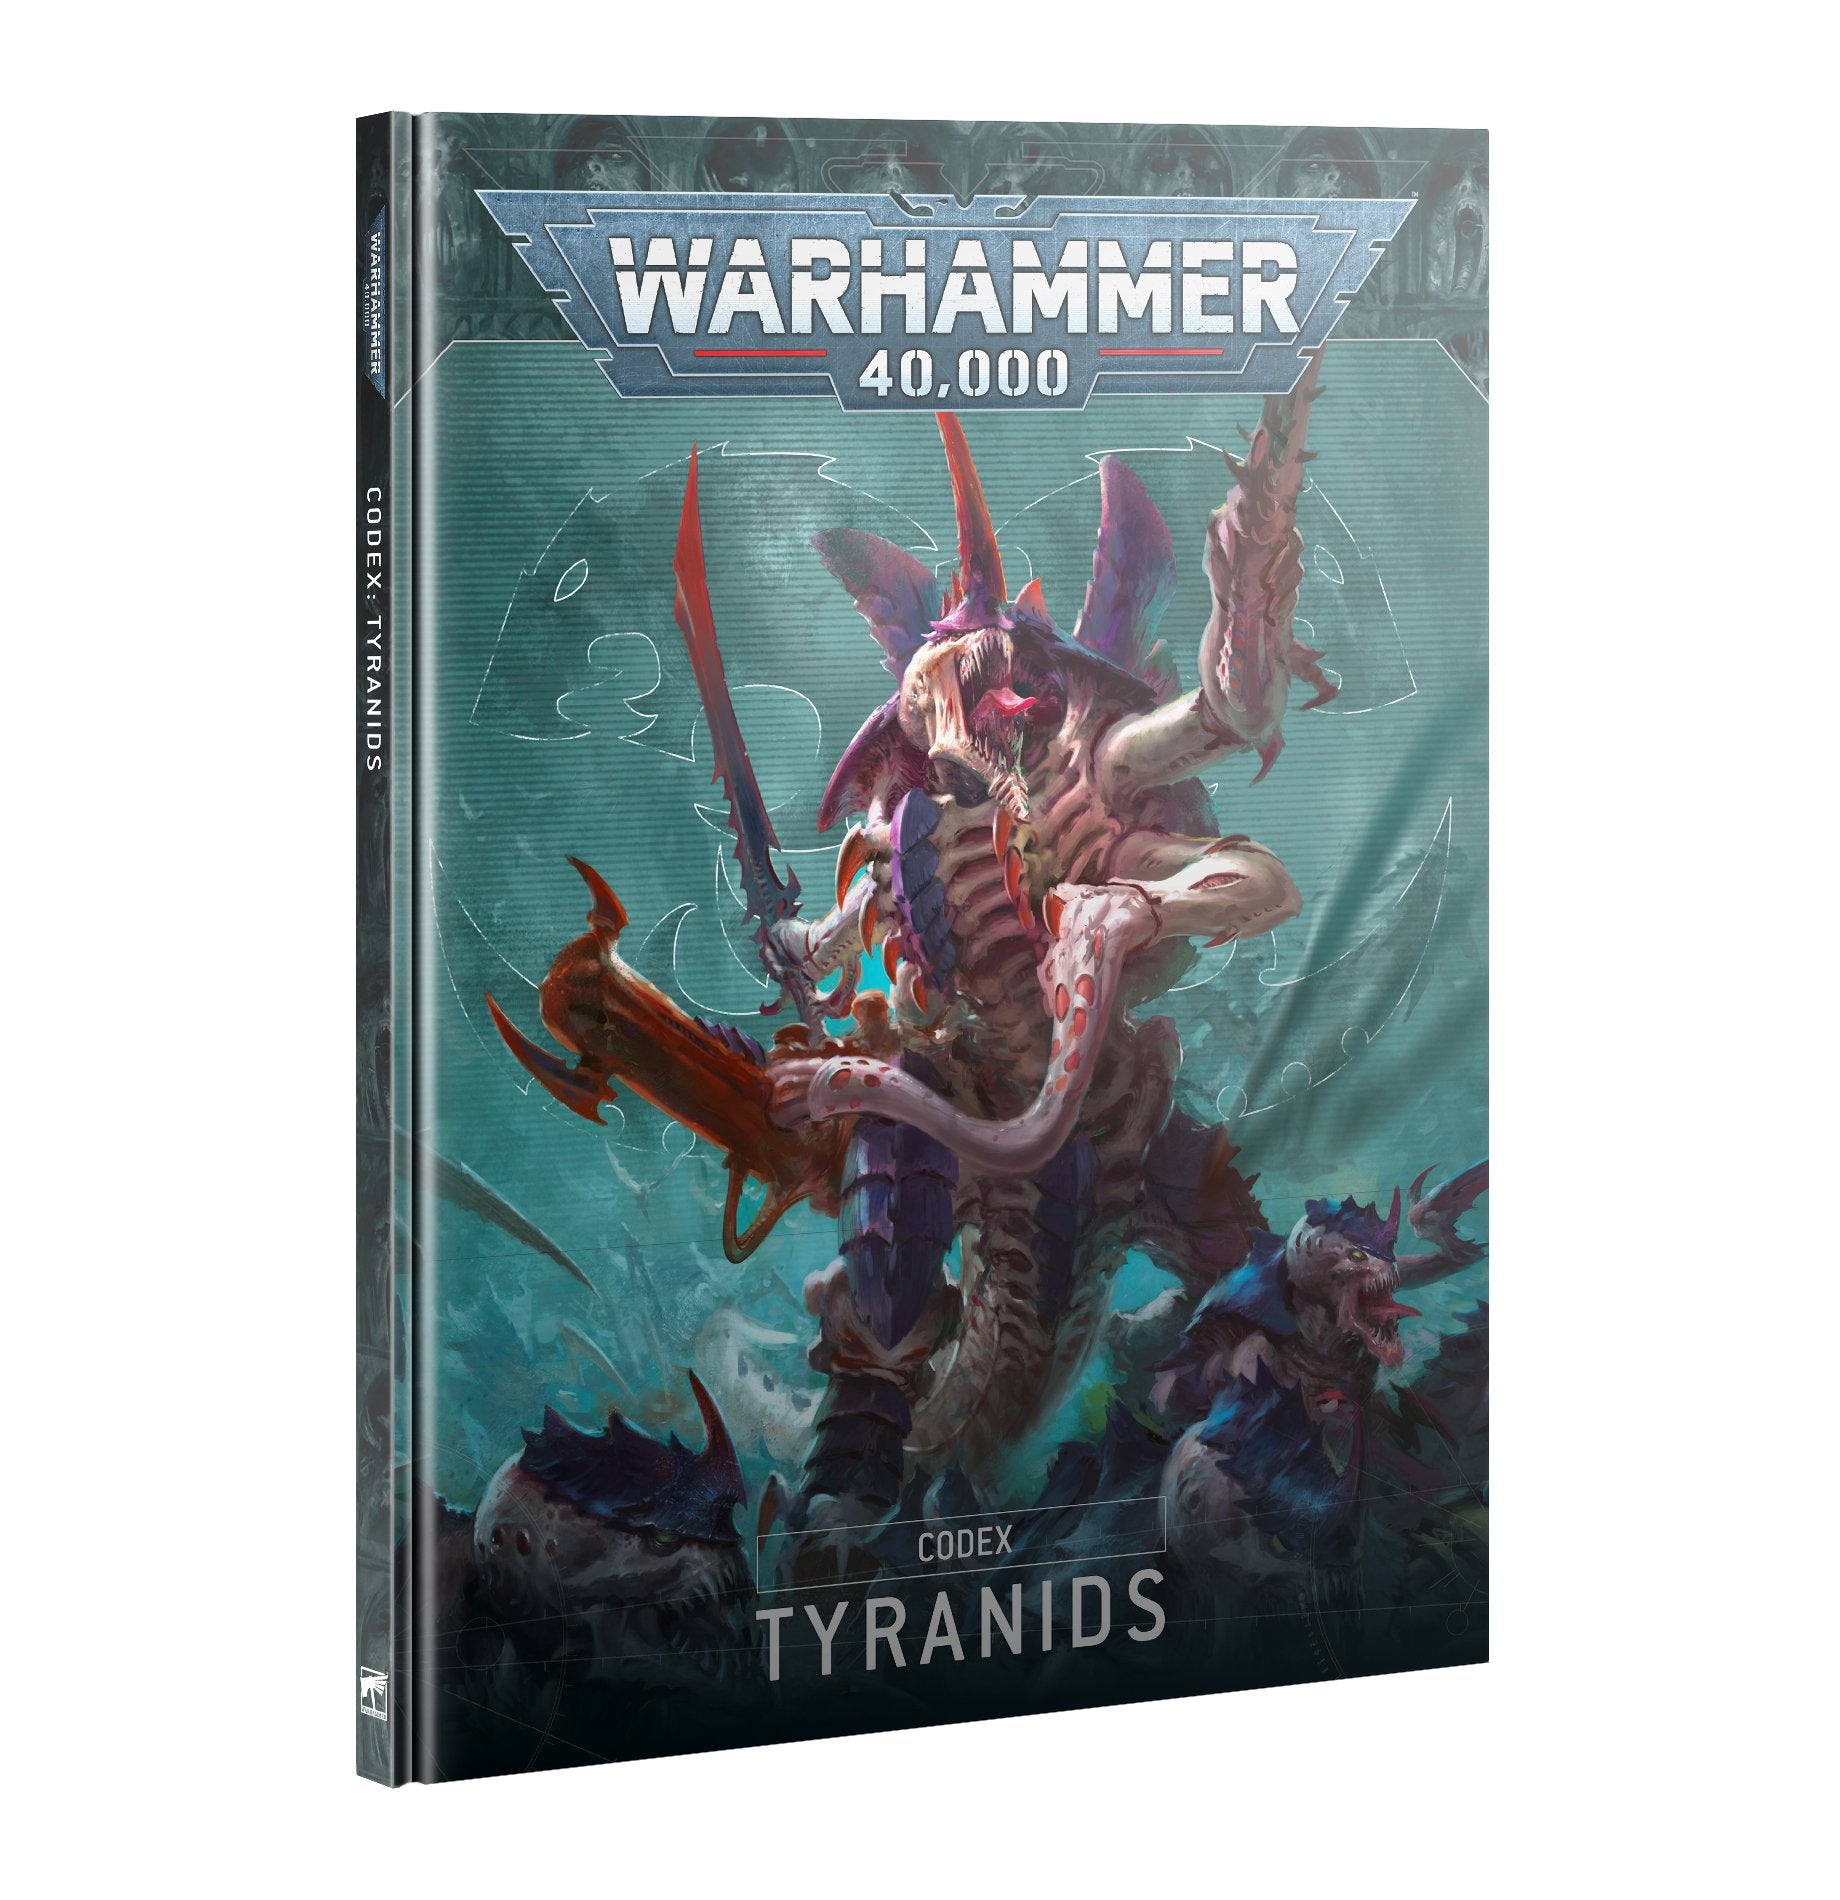 Tyranids-codex-army-rules-warhammer-40K